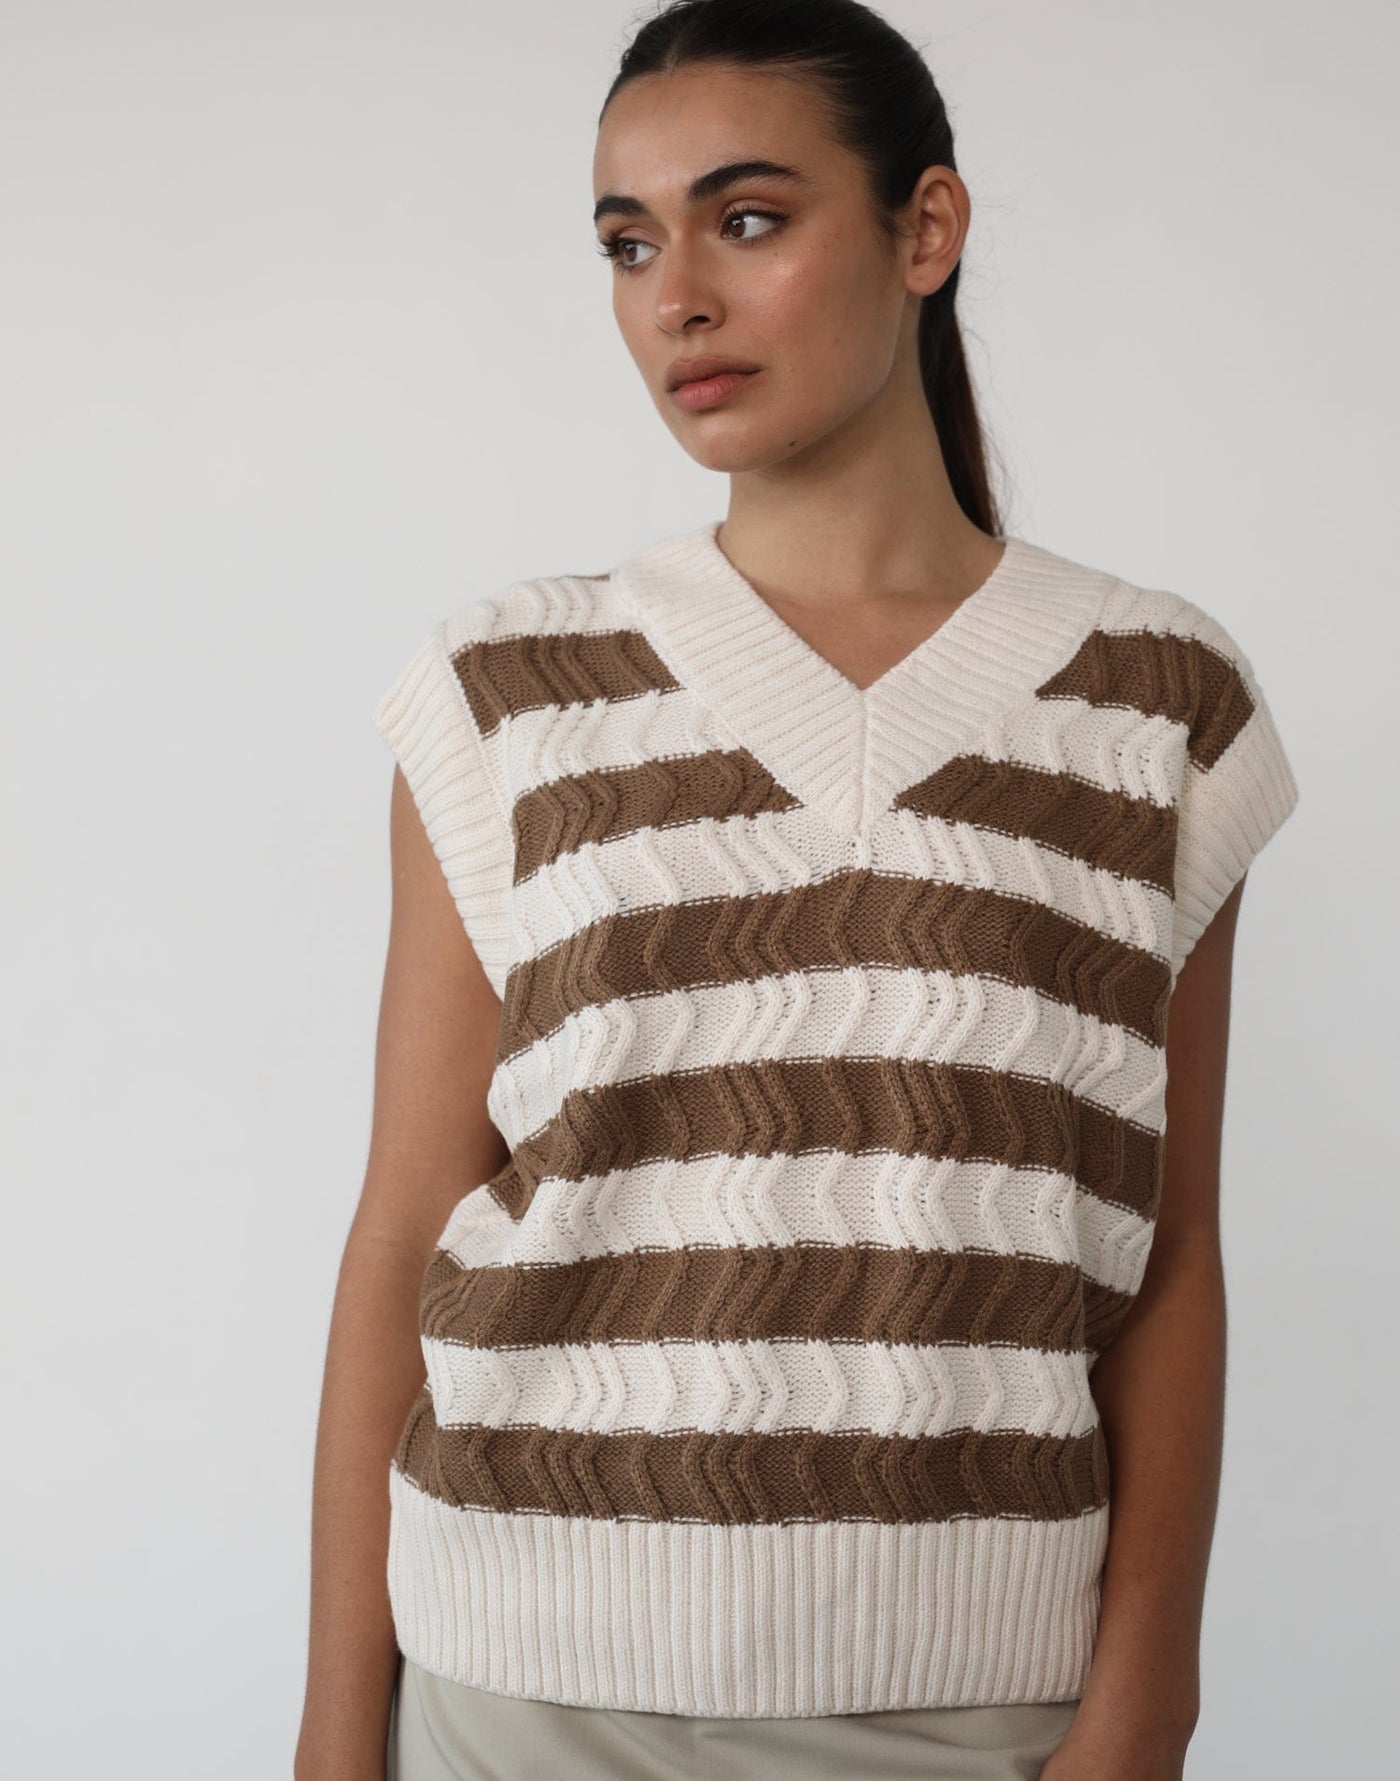 Dustin Knit Vest (Beige/Brown) - Beige Brown Knit Vest - Women's Tops - Charcoal Clothing